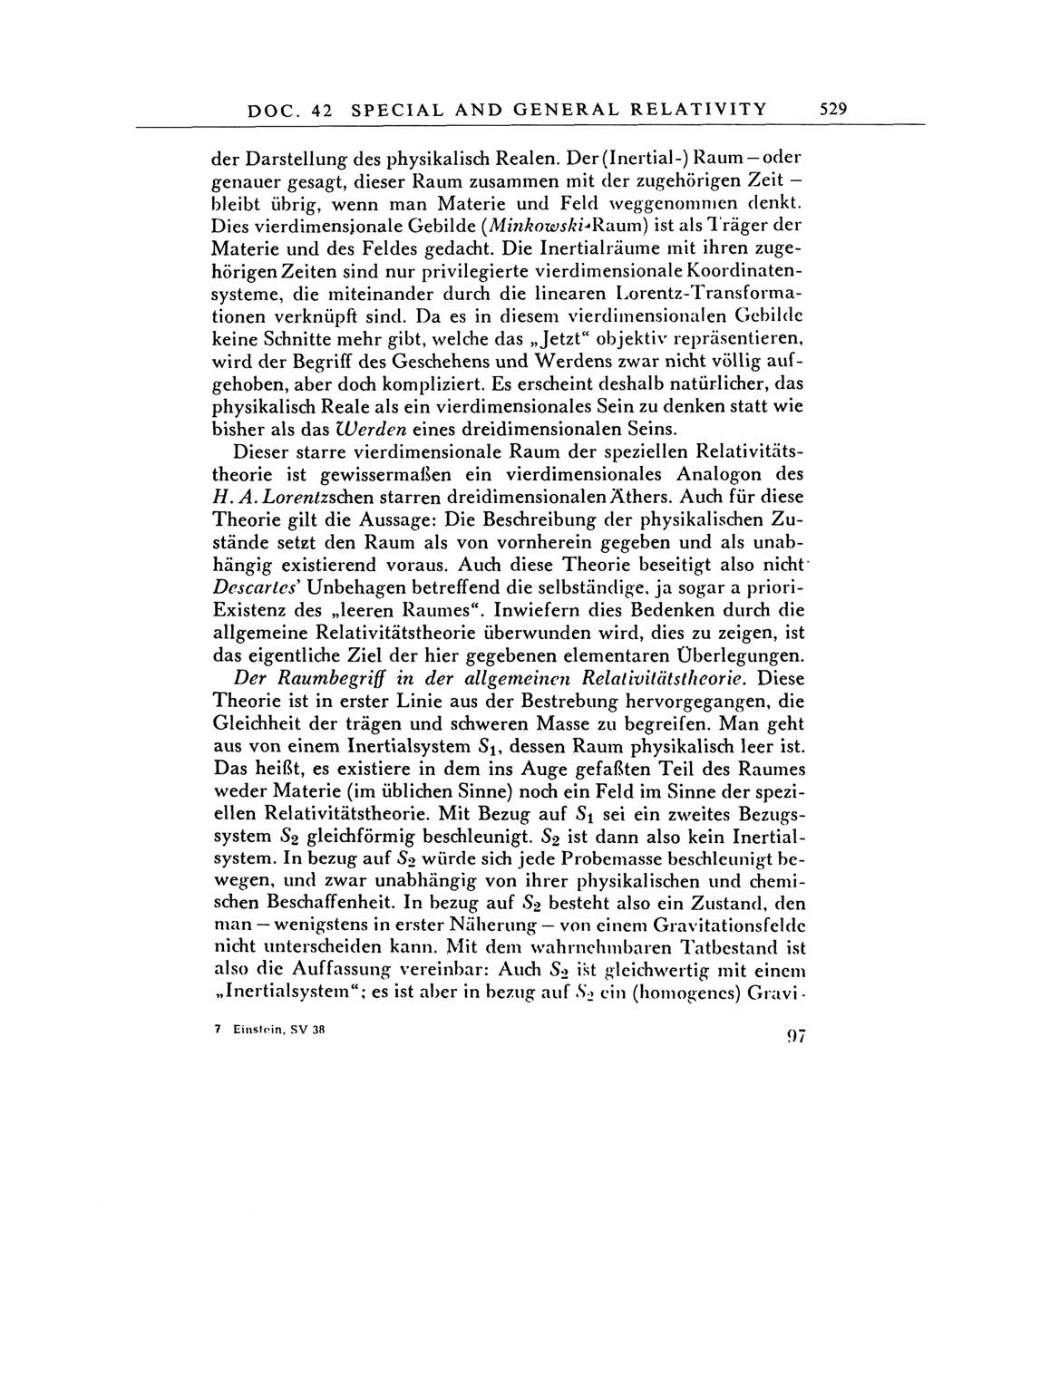 Volume 6: The Berlin Years: Writings, 1914-1917 page 529